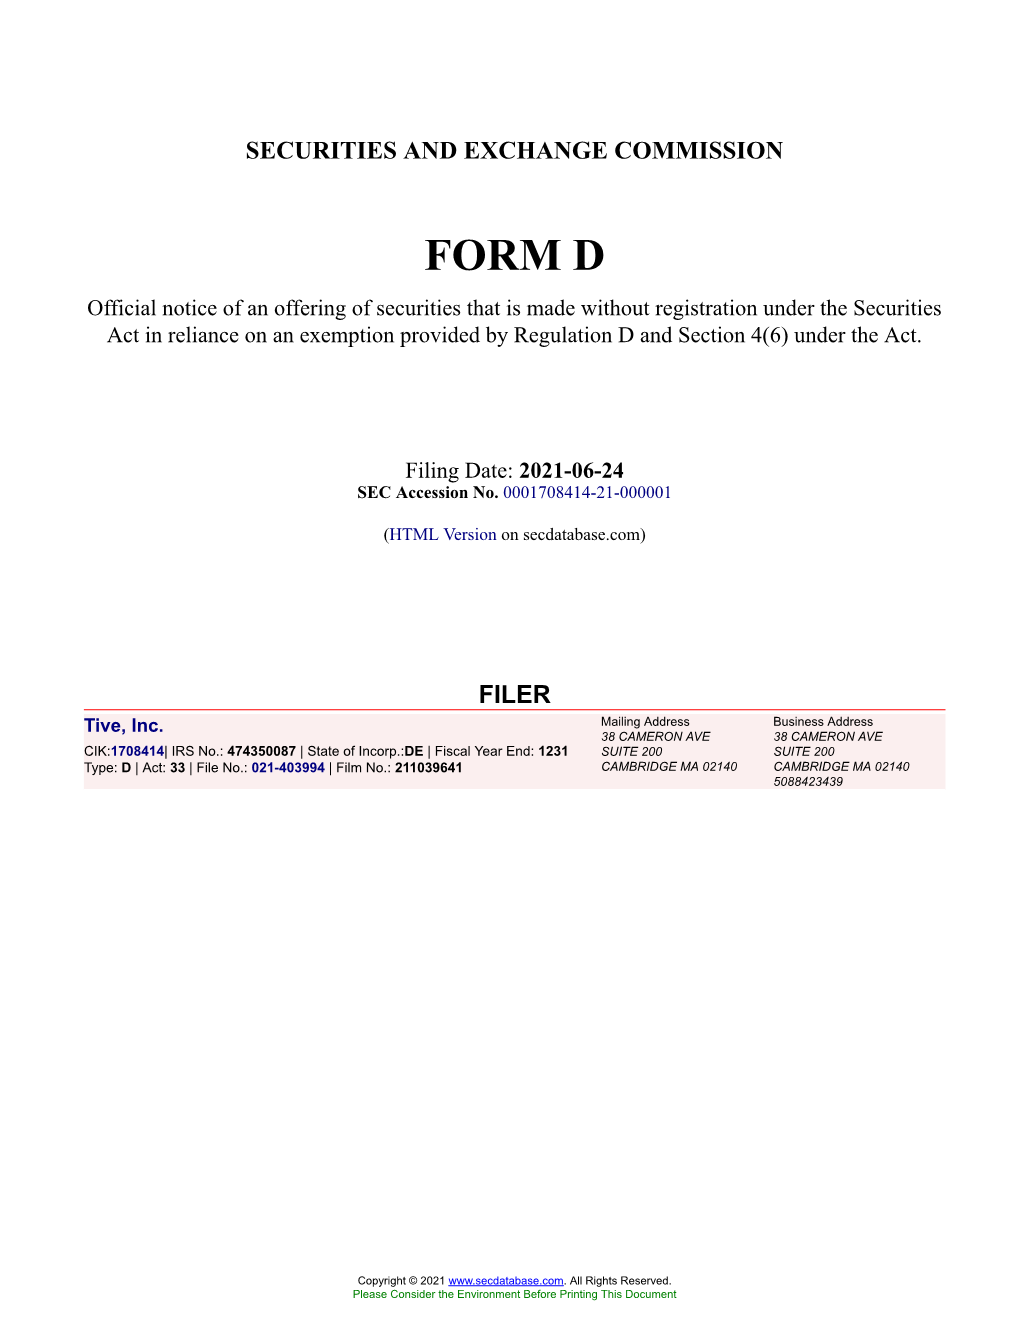 Tive, Inc. Form D Filed 2021-06-24